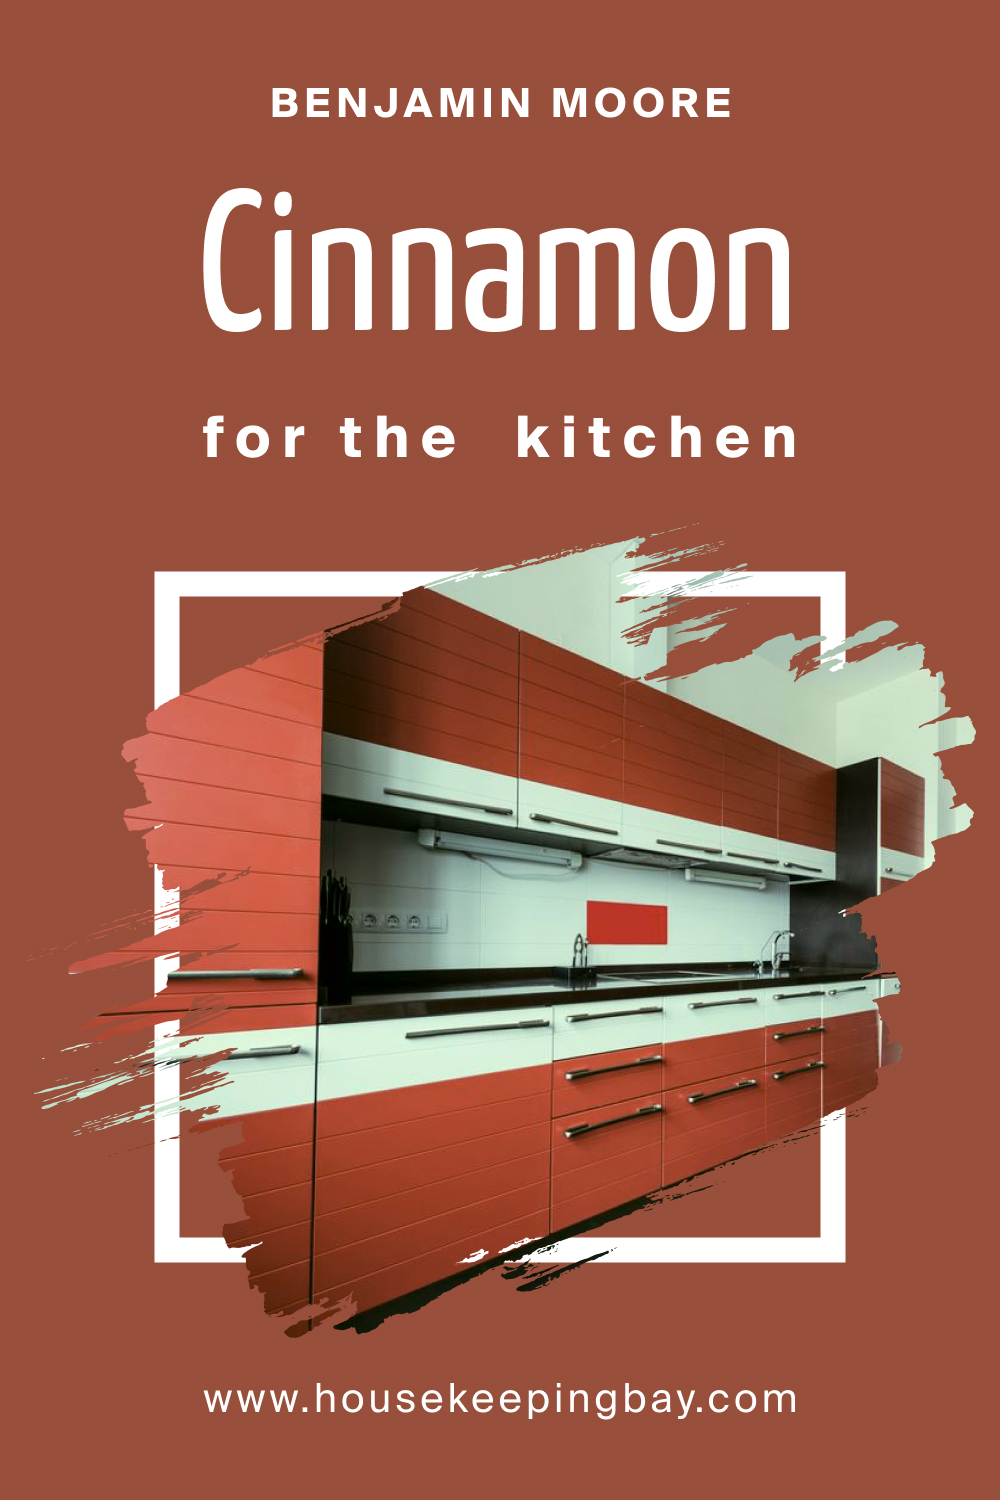 Benjamin Moore. Cinnamon 2174 20 for the Kitchen